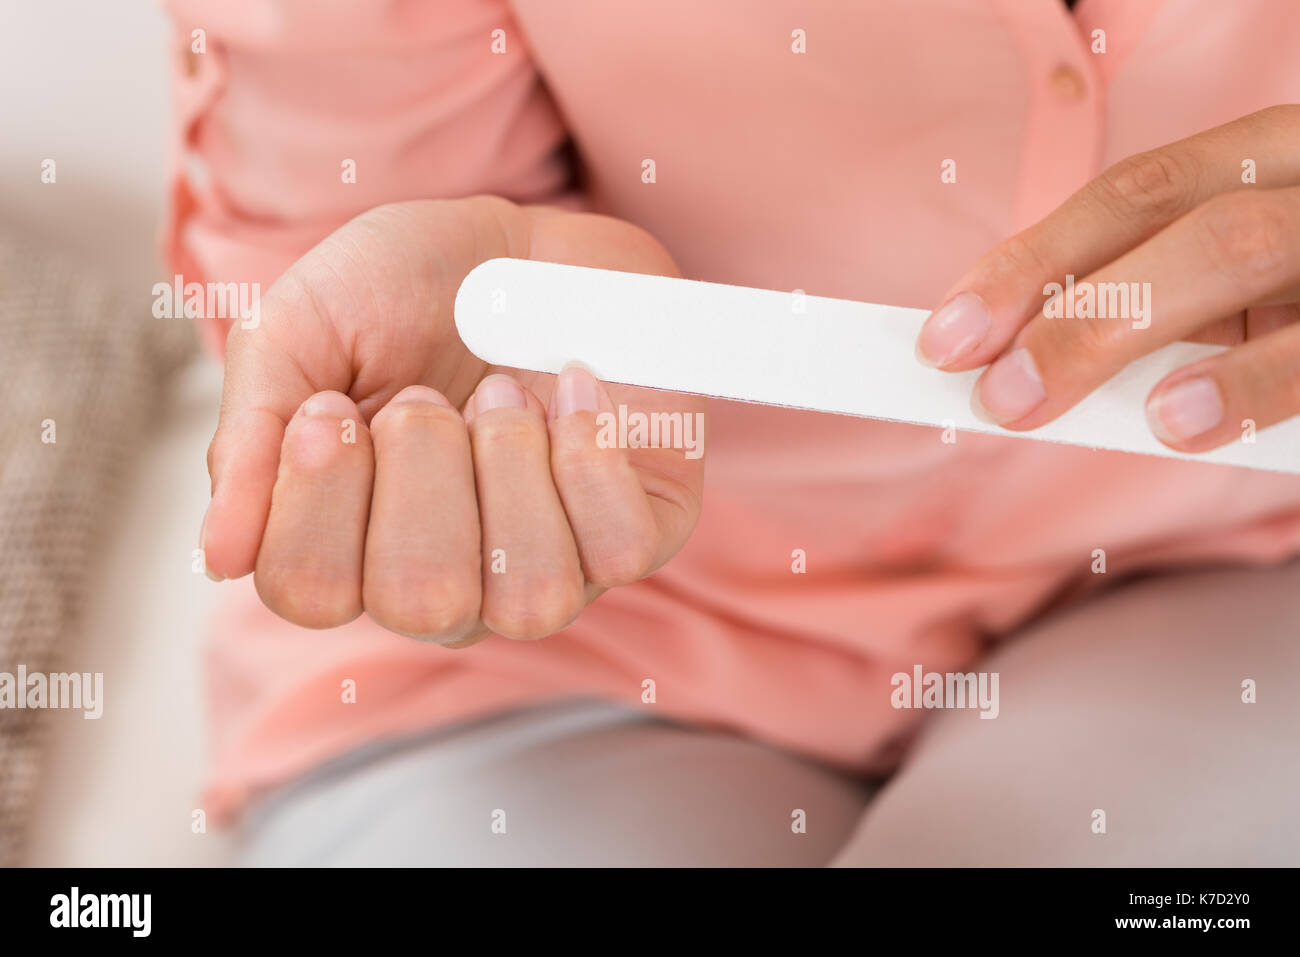 Close-up Photo Of Woman Hands Filing Nails Stock Photo